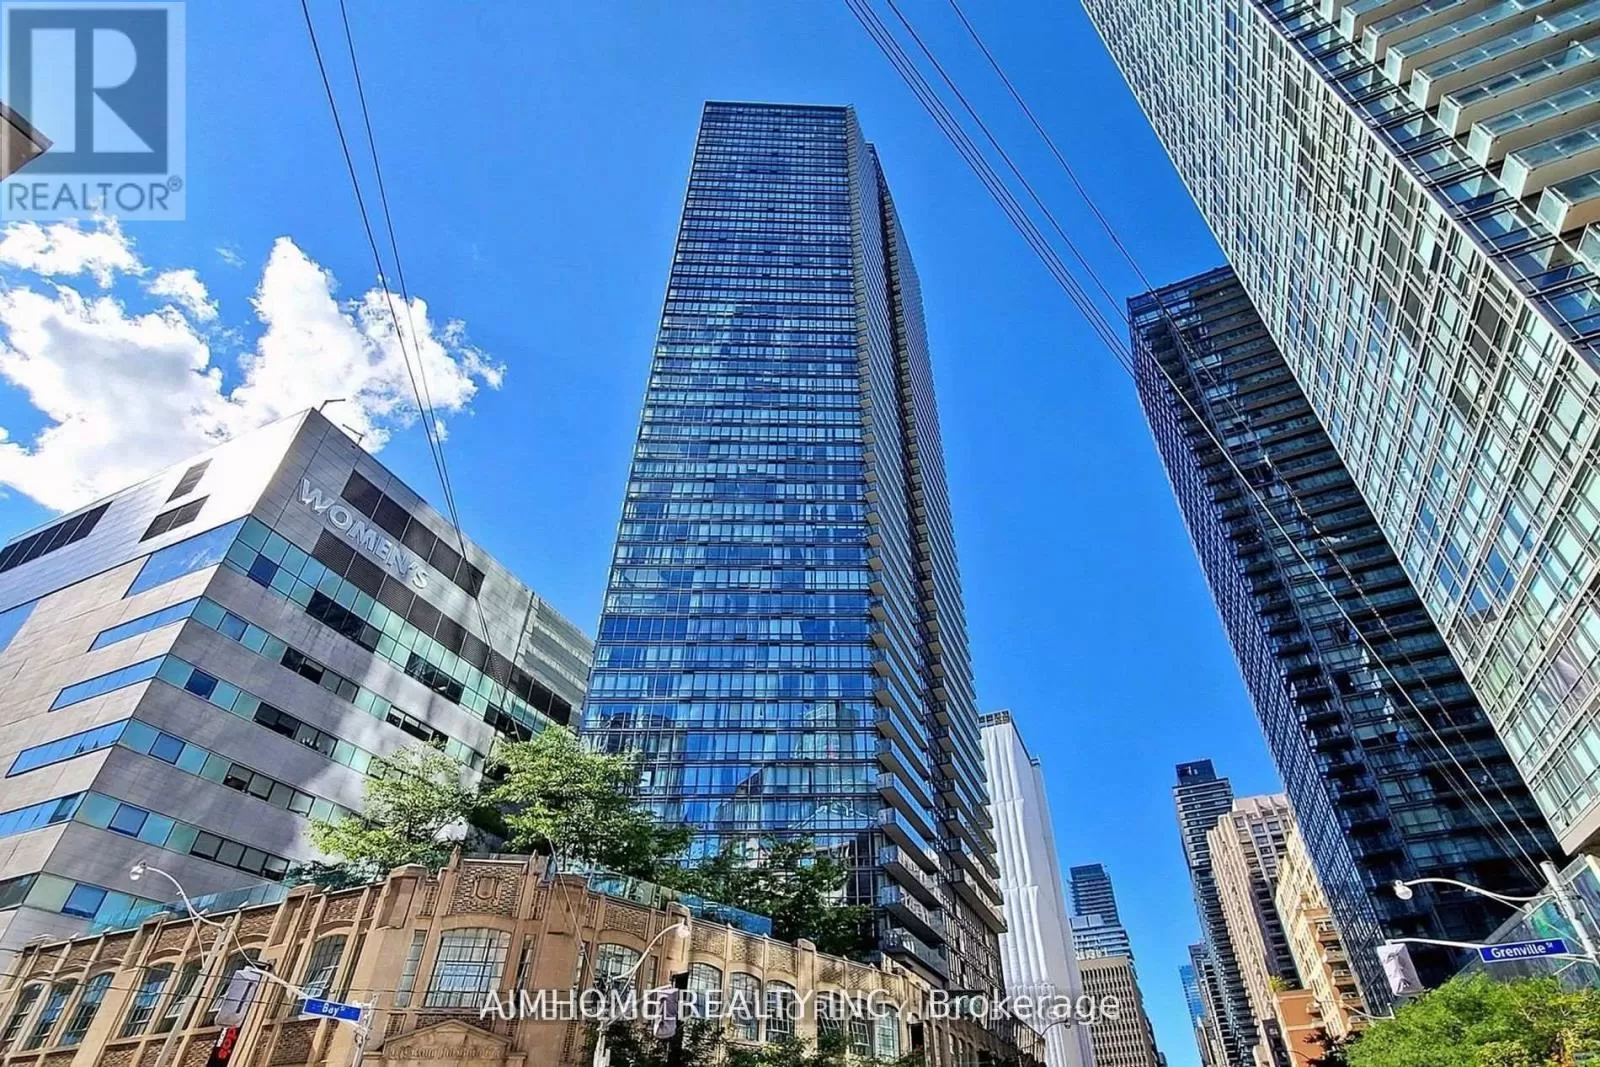 Apartment for rent: 2506 - 832 Bay Street, Toronto, Ontario M5S 1Z6